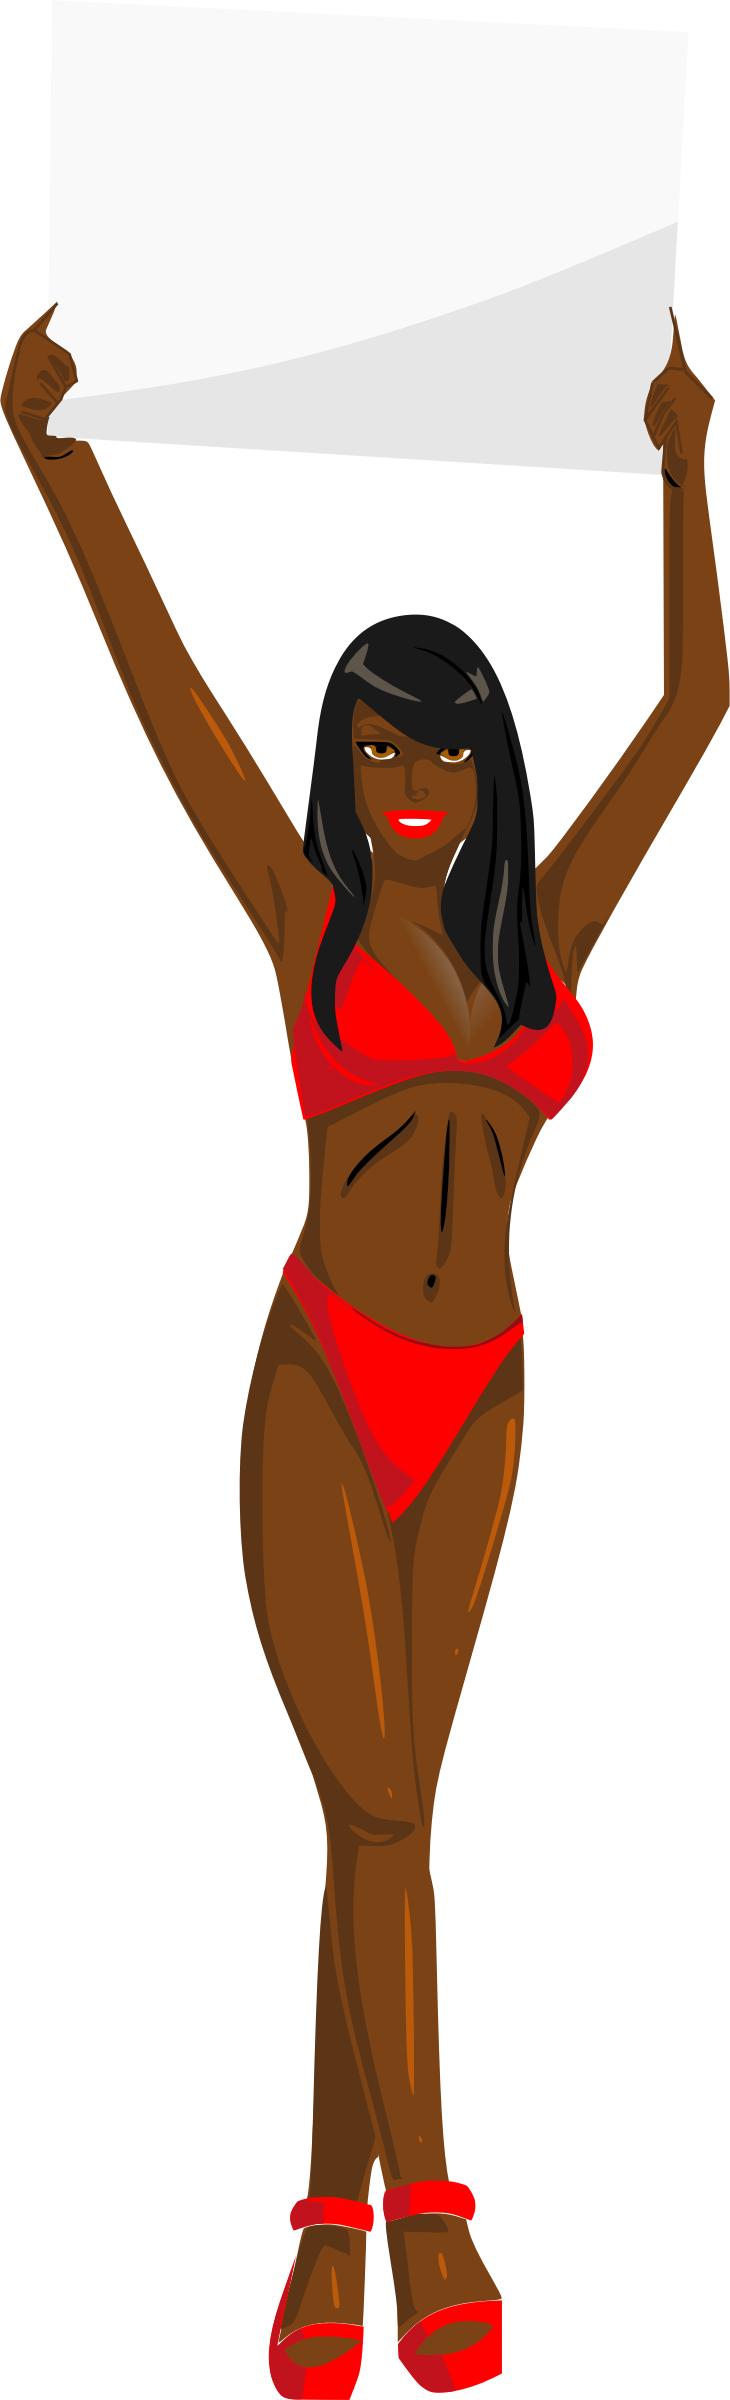 Girl with sign (red bikini, black hair, dark skin) png